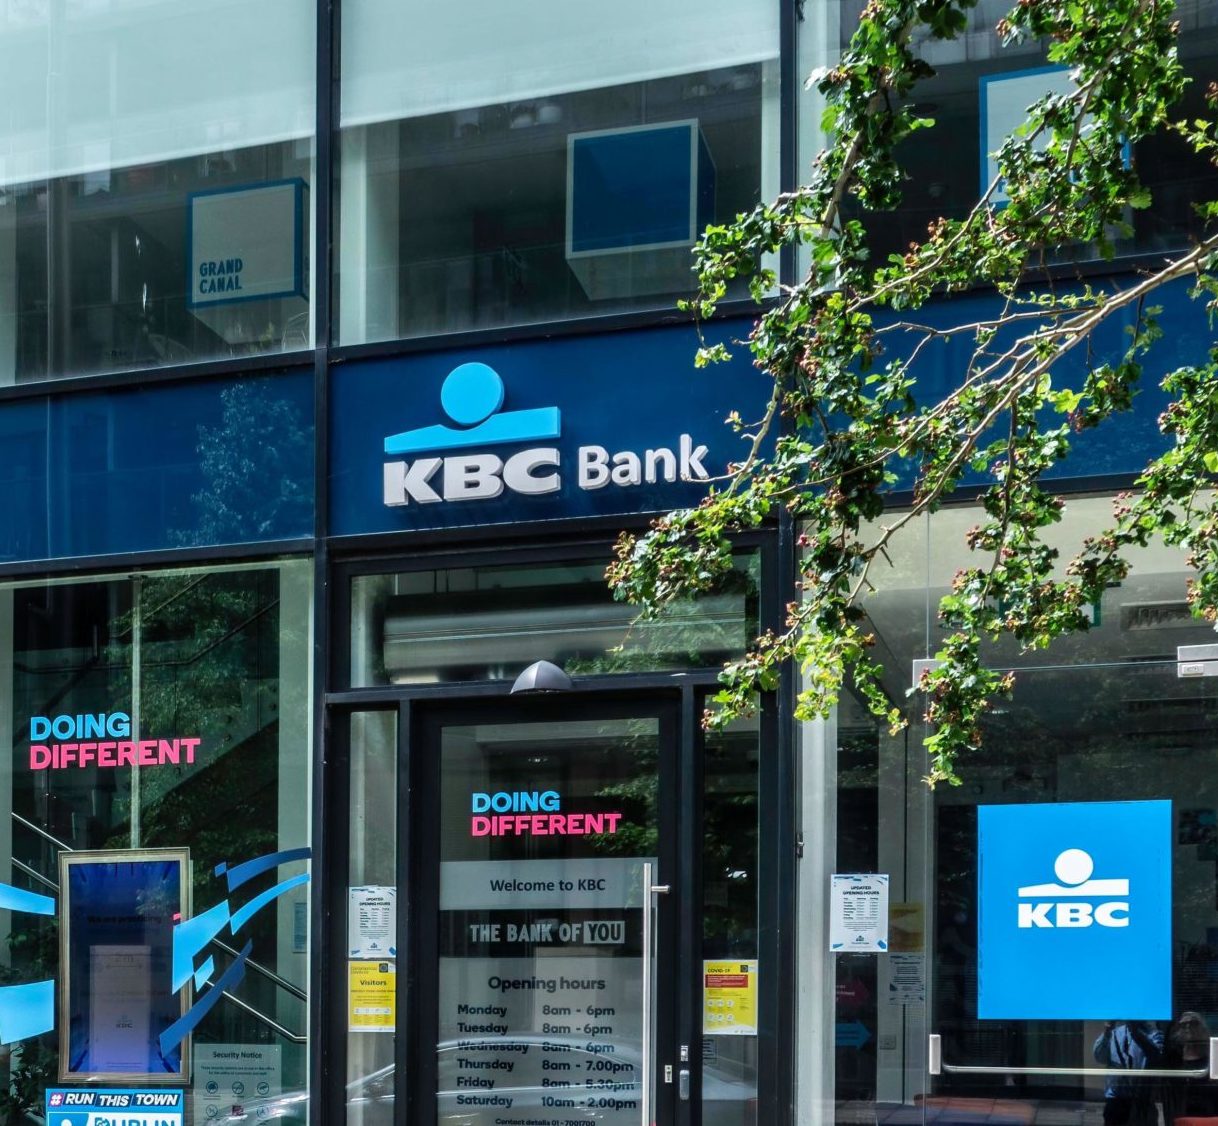 A branch of KBC Bank on Forbes Street in Dublin, Ireland in June 2021.